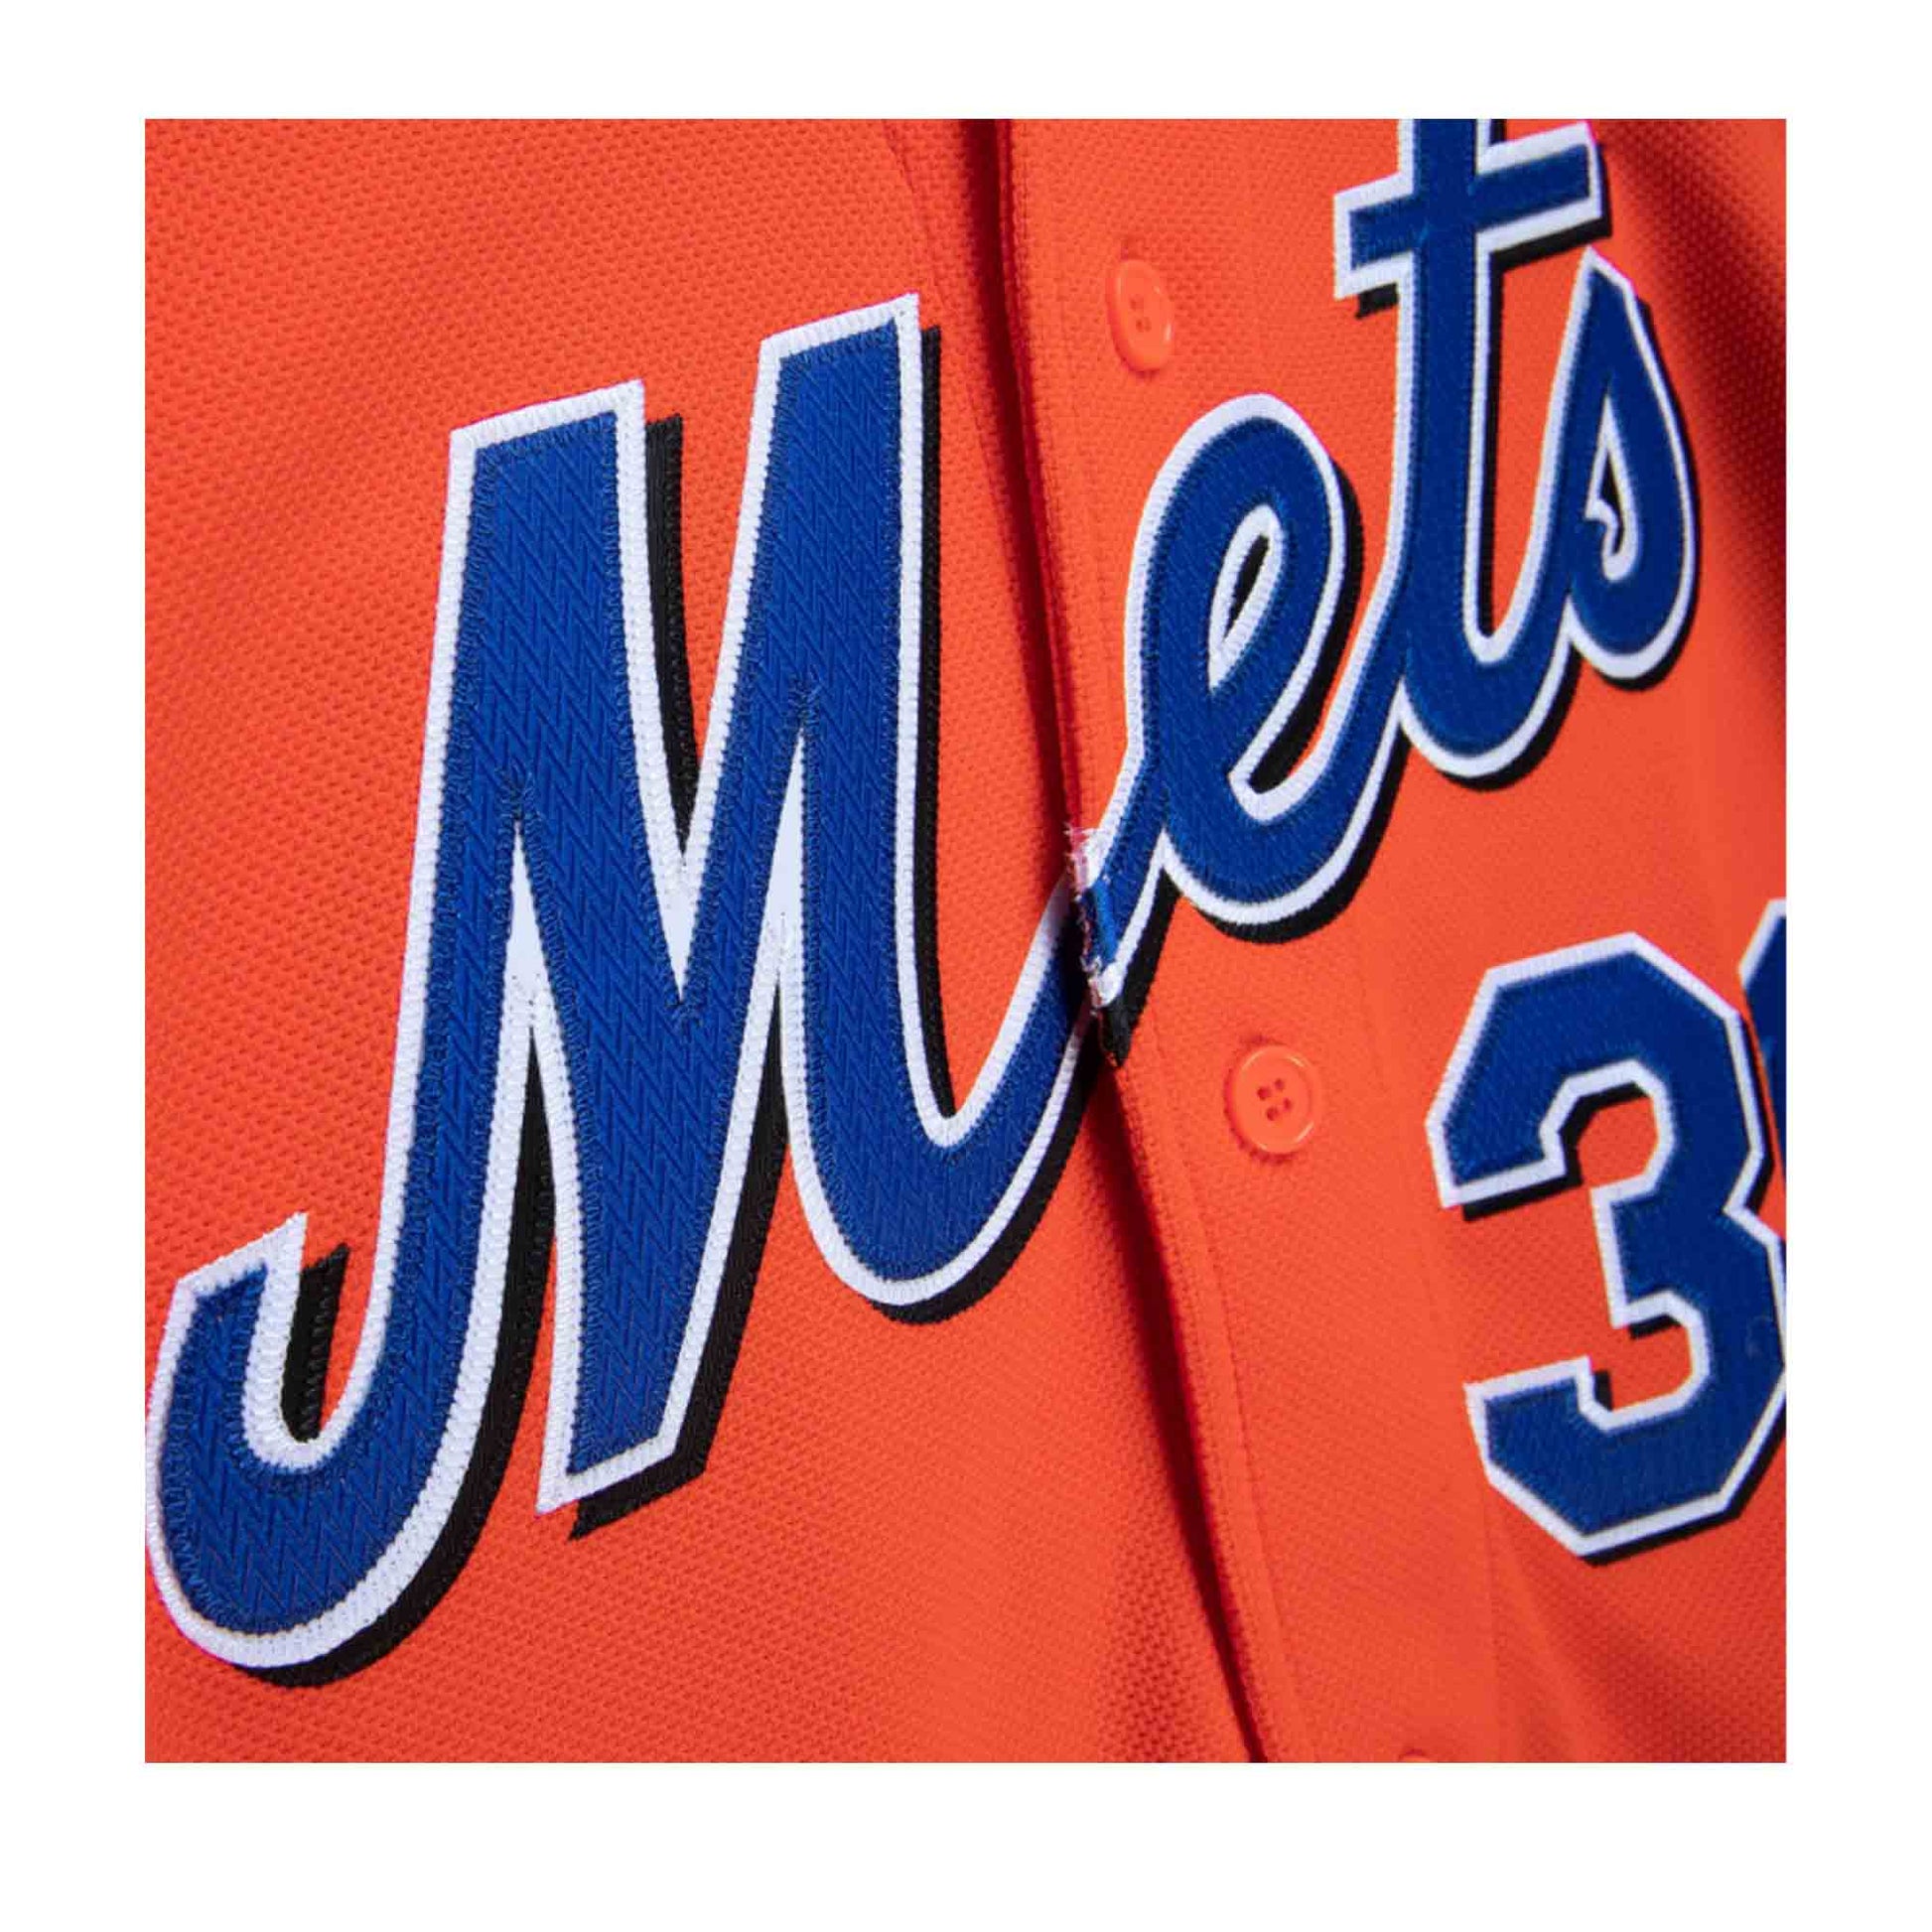 Mike Piazza New York Mets 2004 Authentic Batting Practice Jersey- Orange